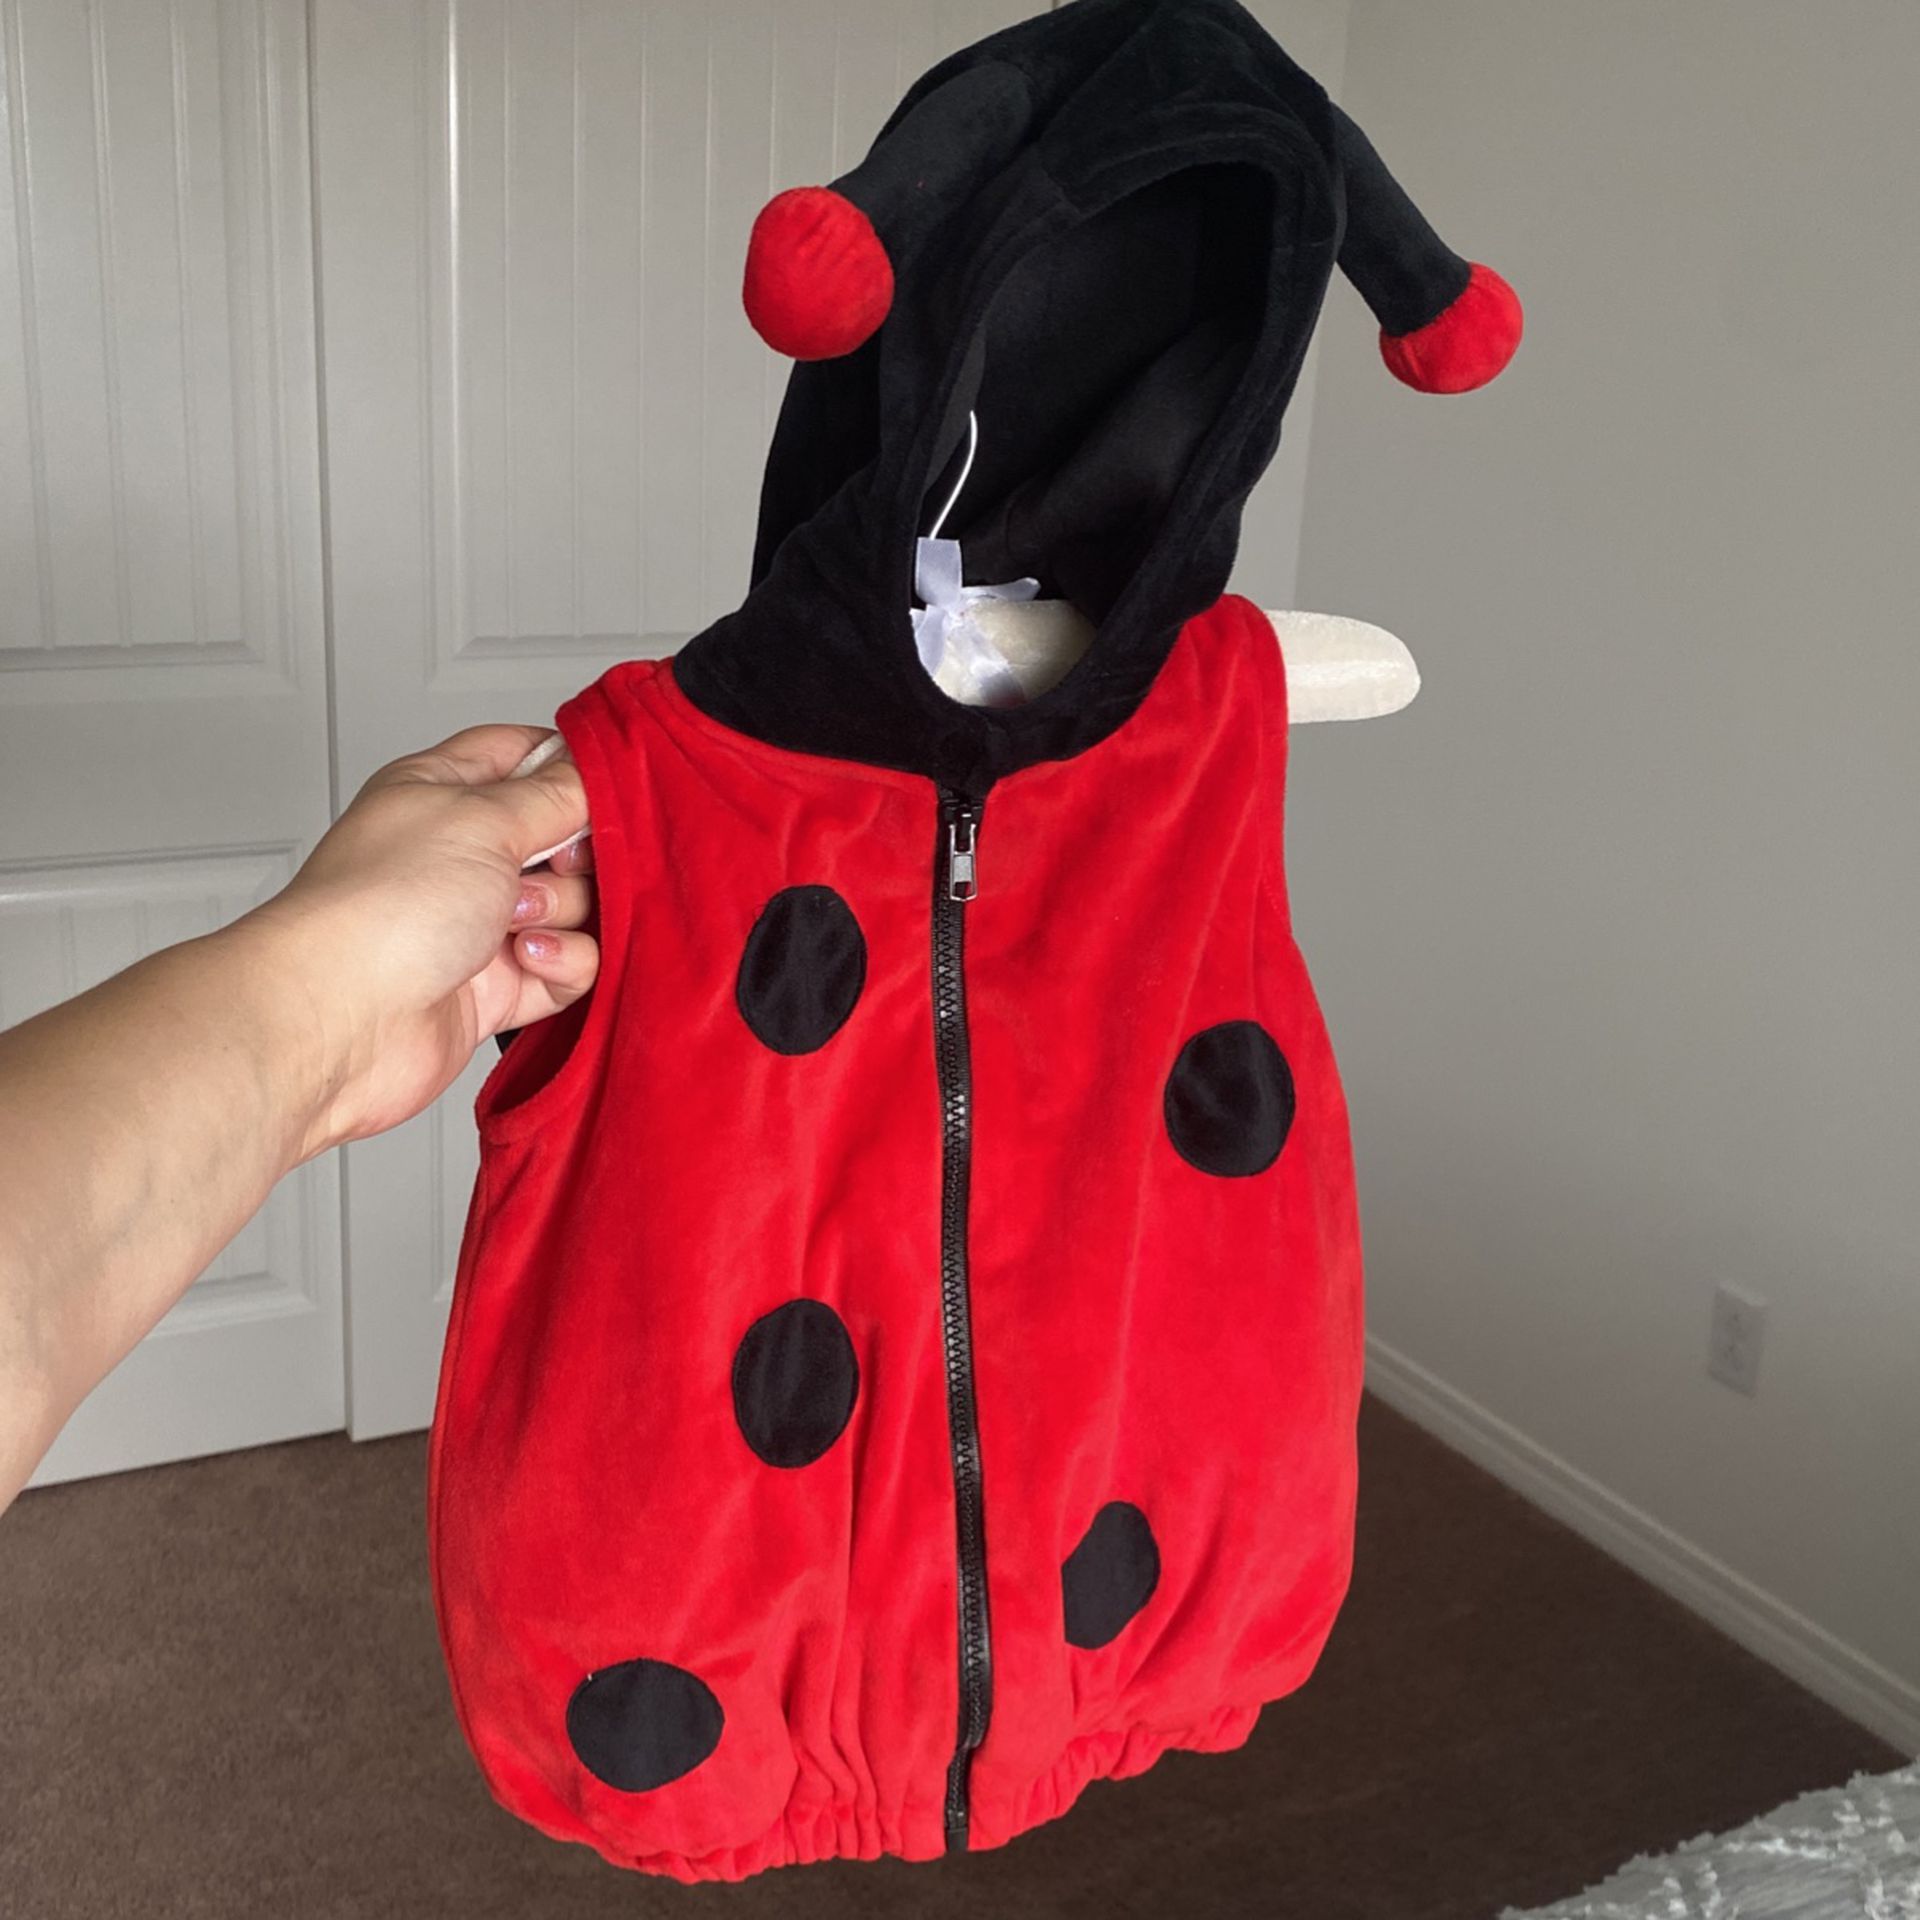 Baby’s lady bug Costume 